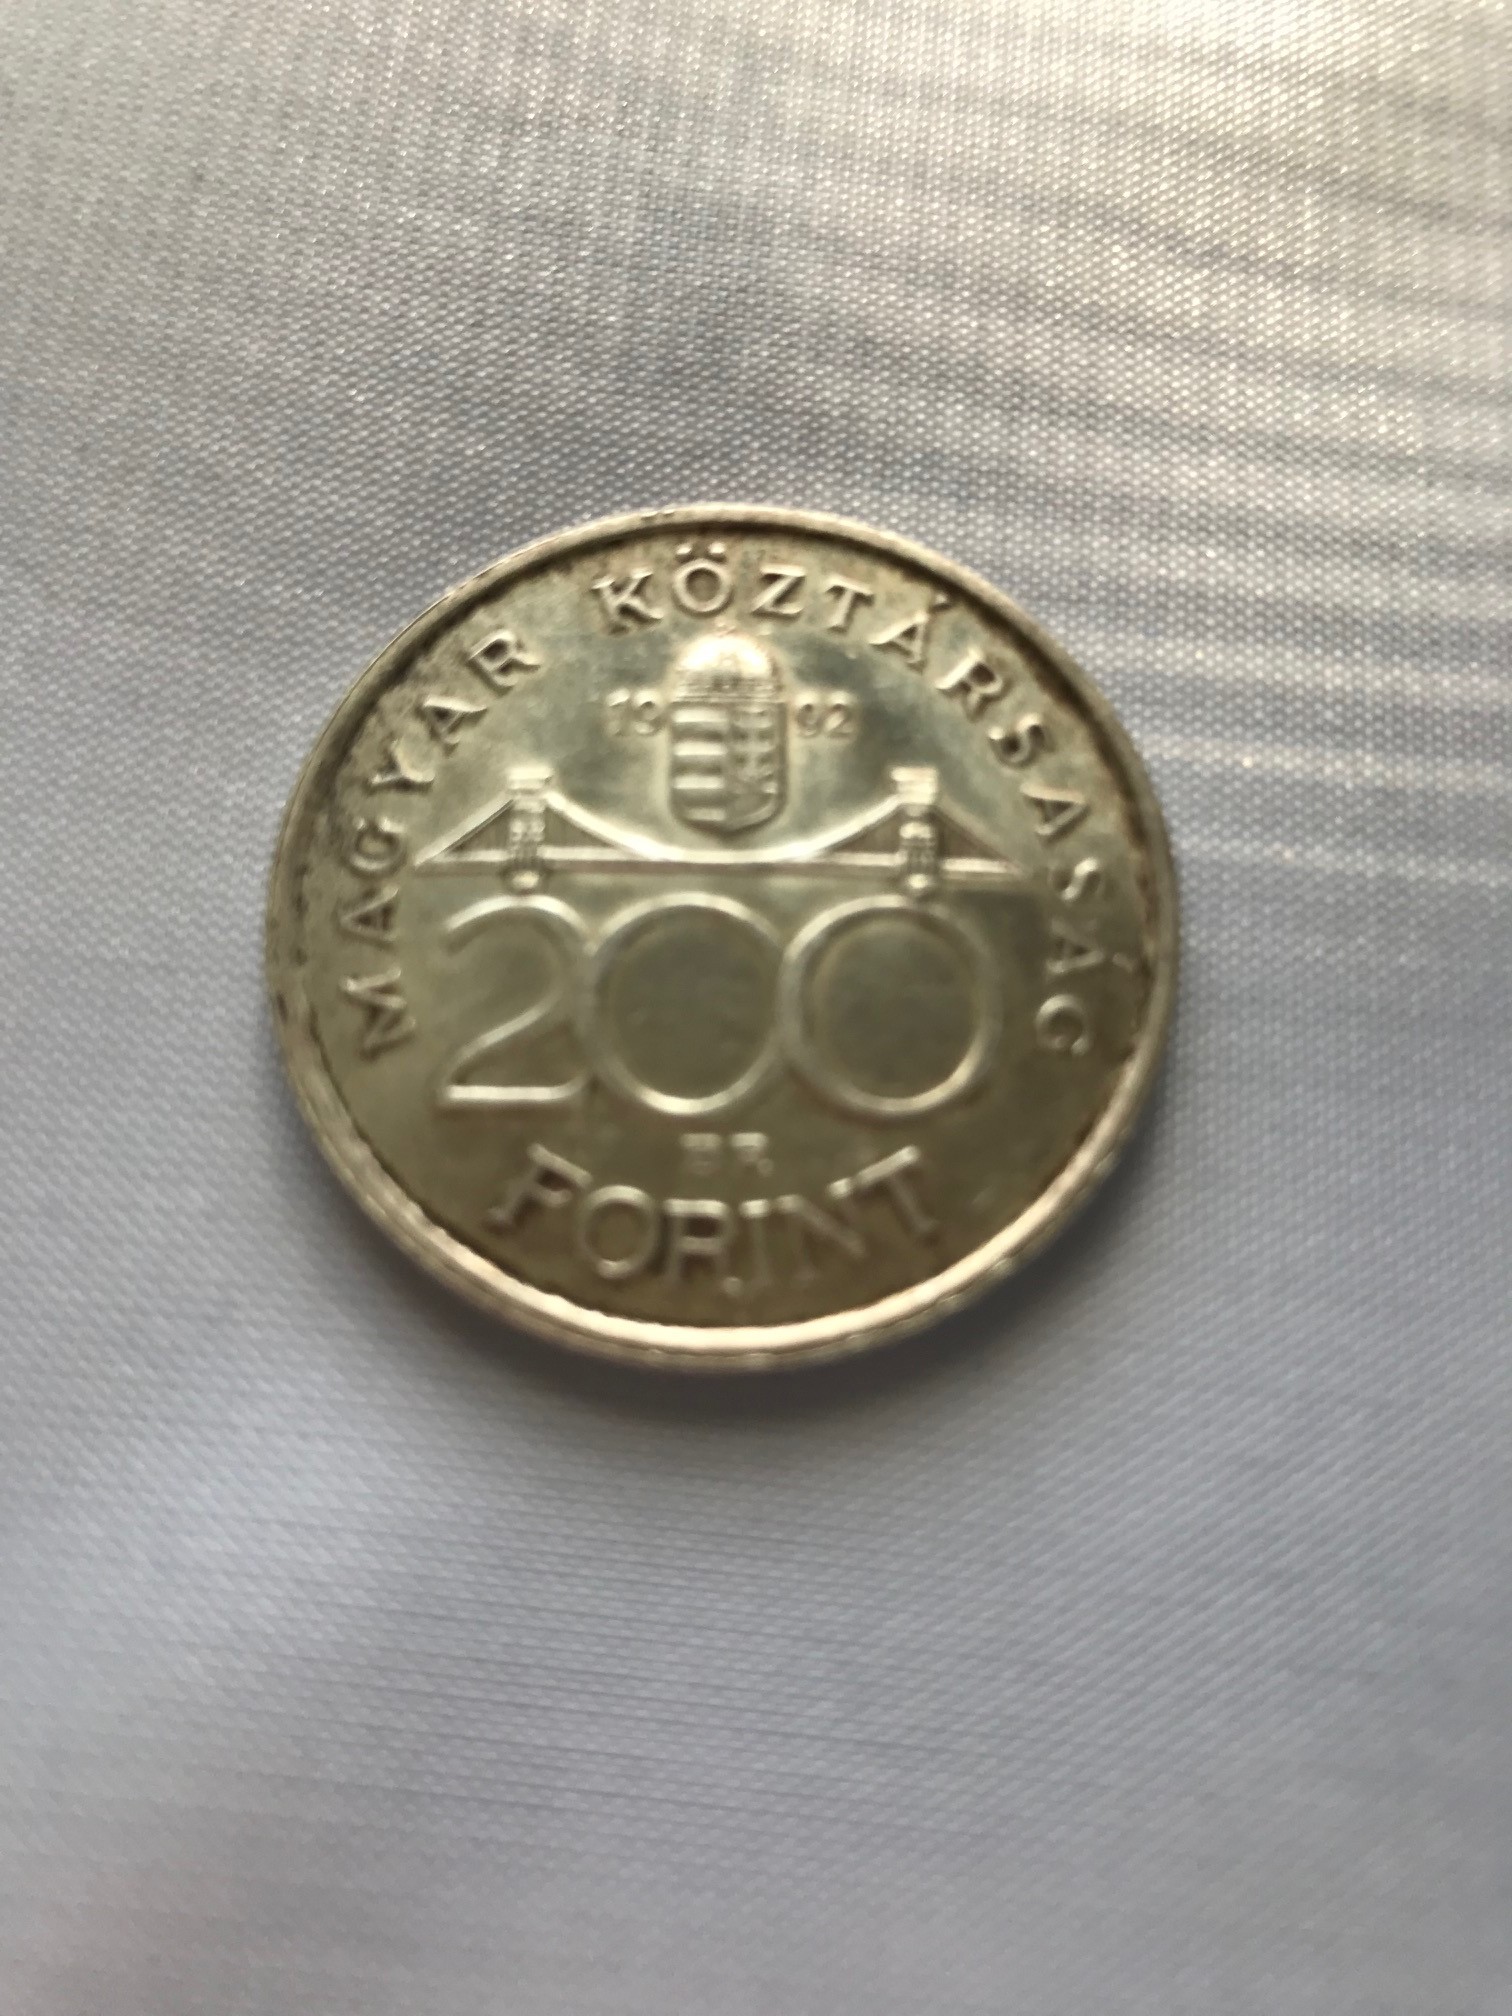 1992 200 forint obverse